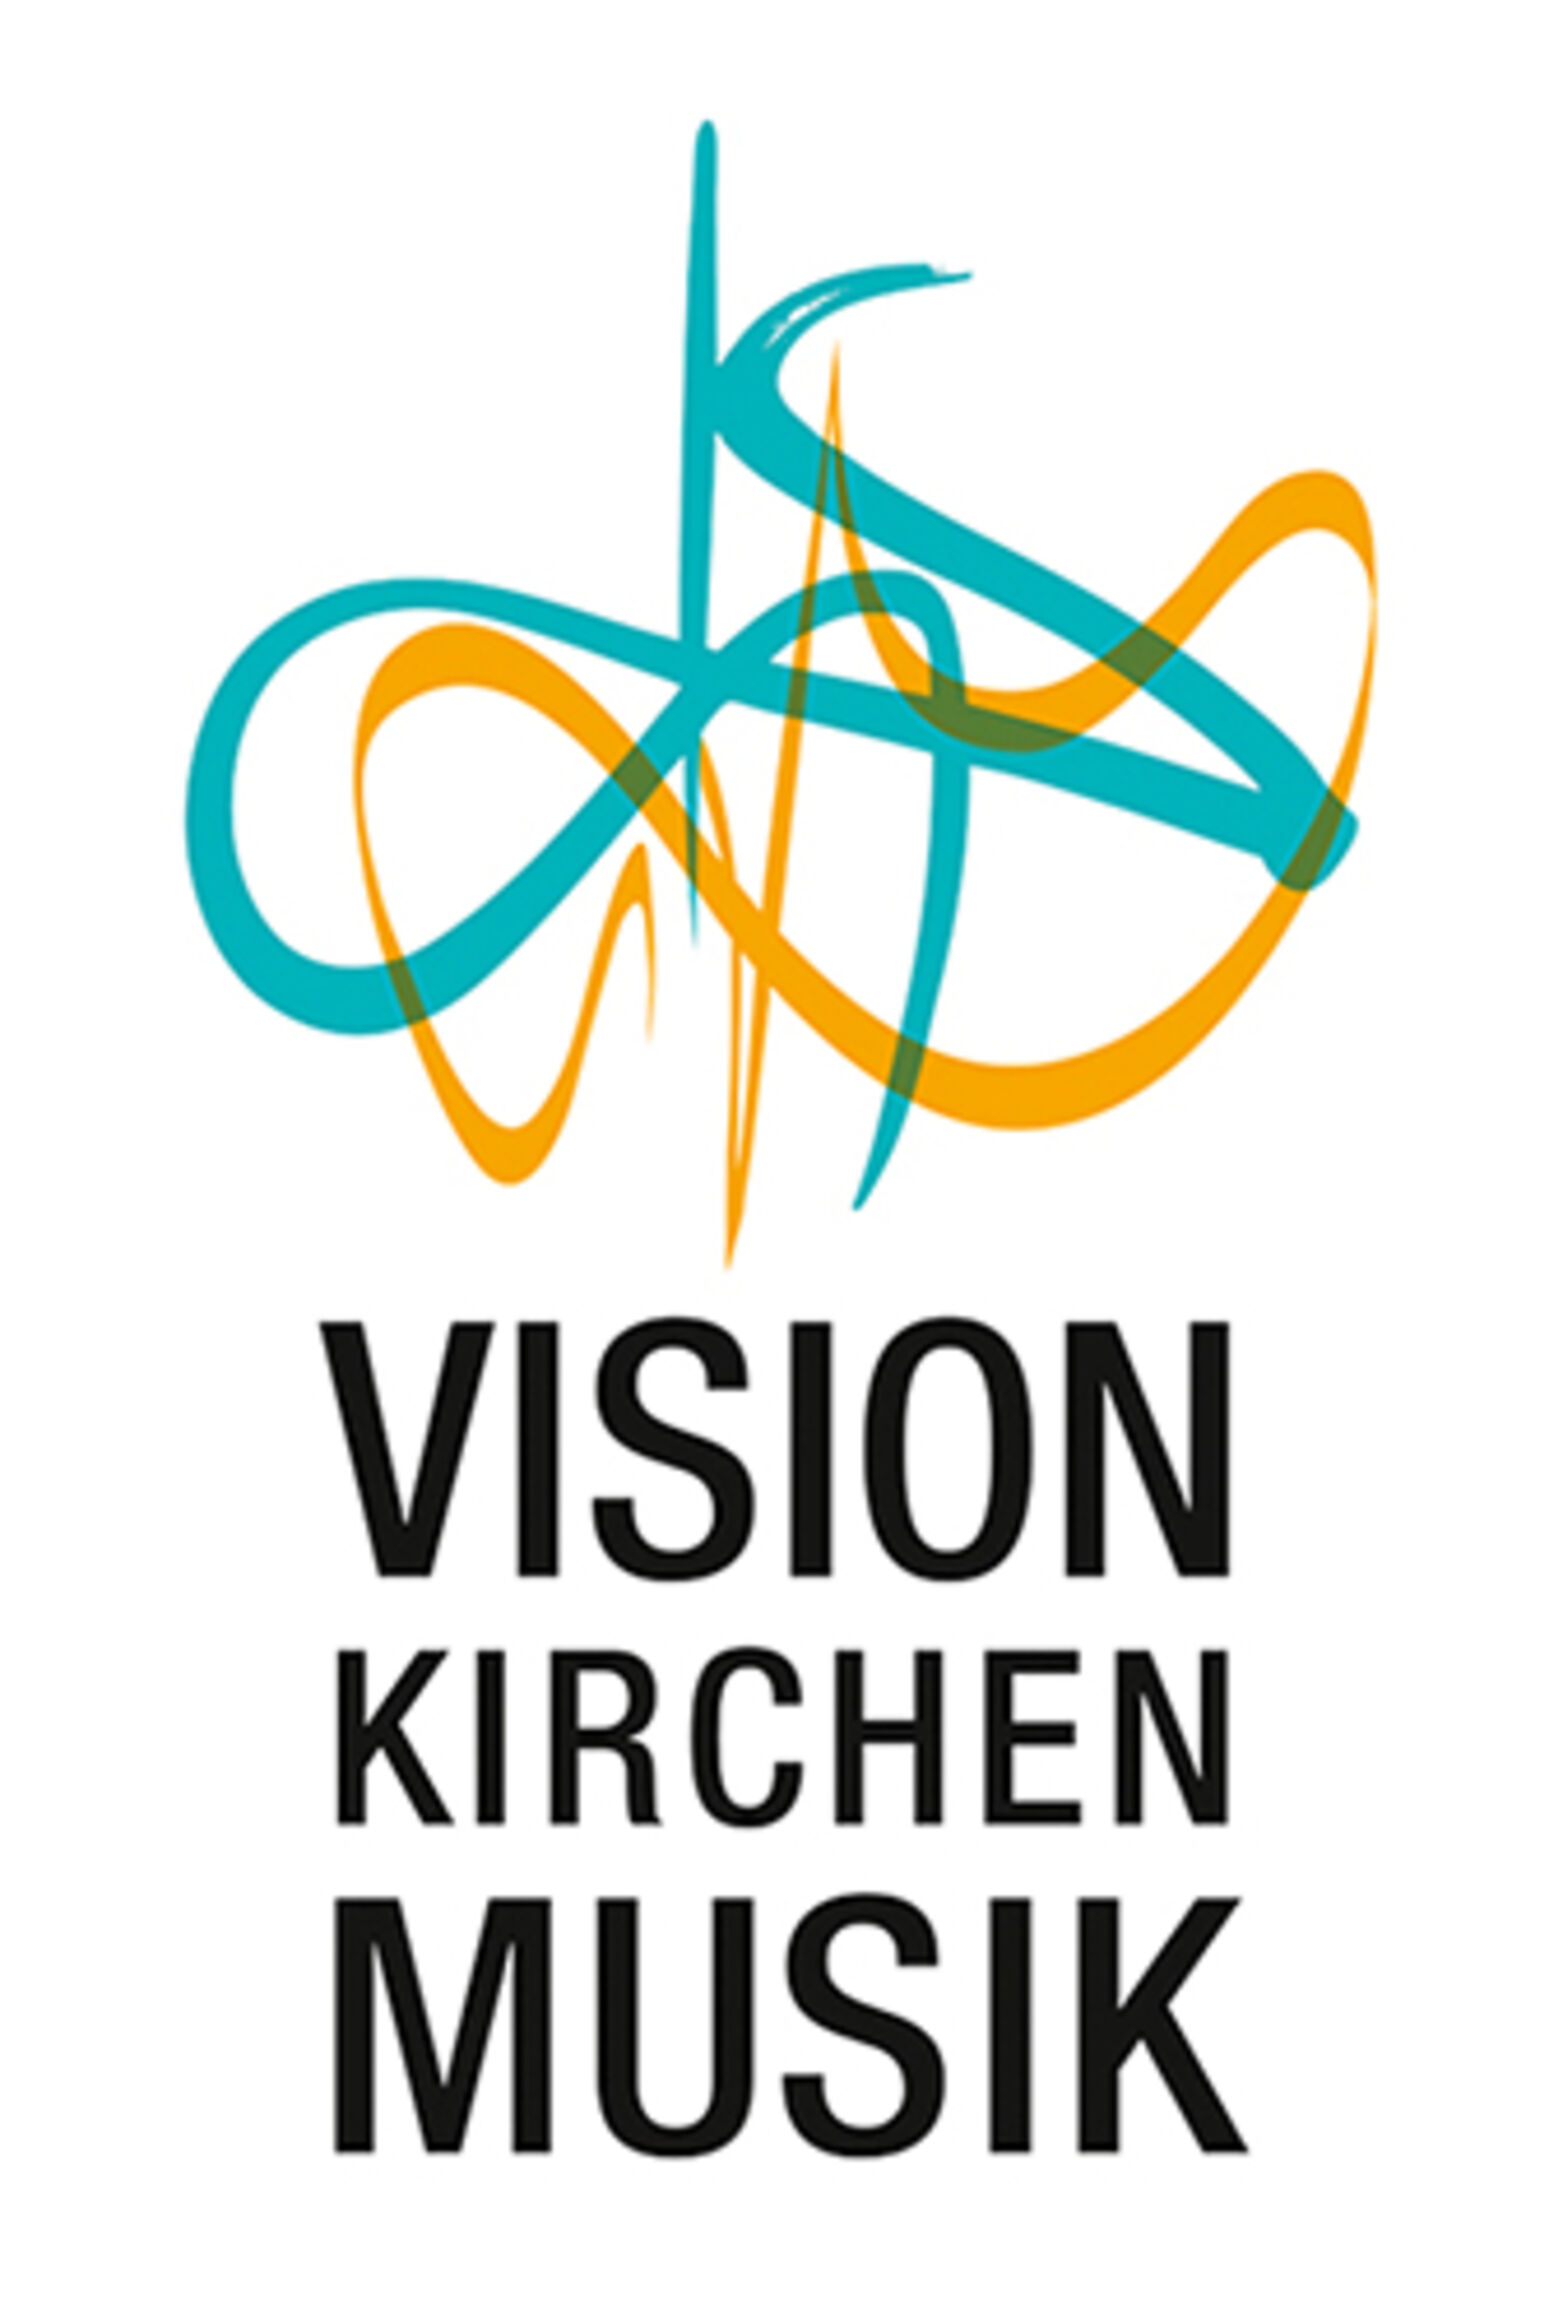 Vision kirchenmusik f.web v.Ulf mail 12.05.15 druck extra anfordern